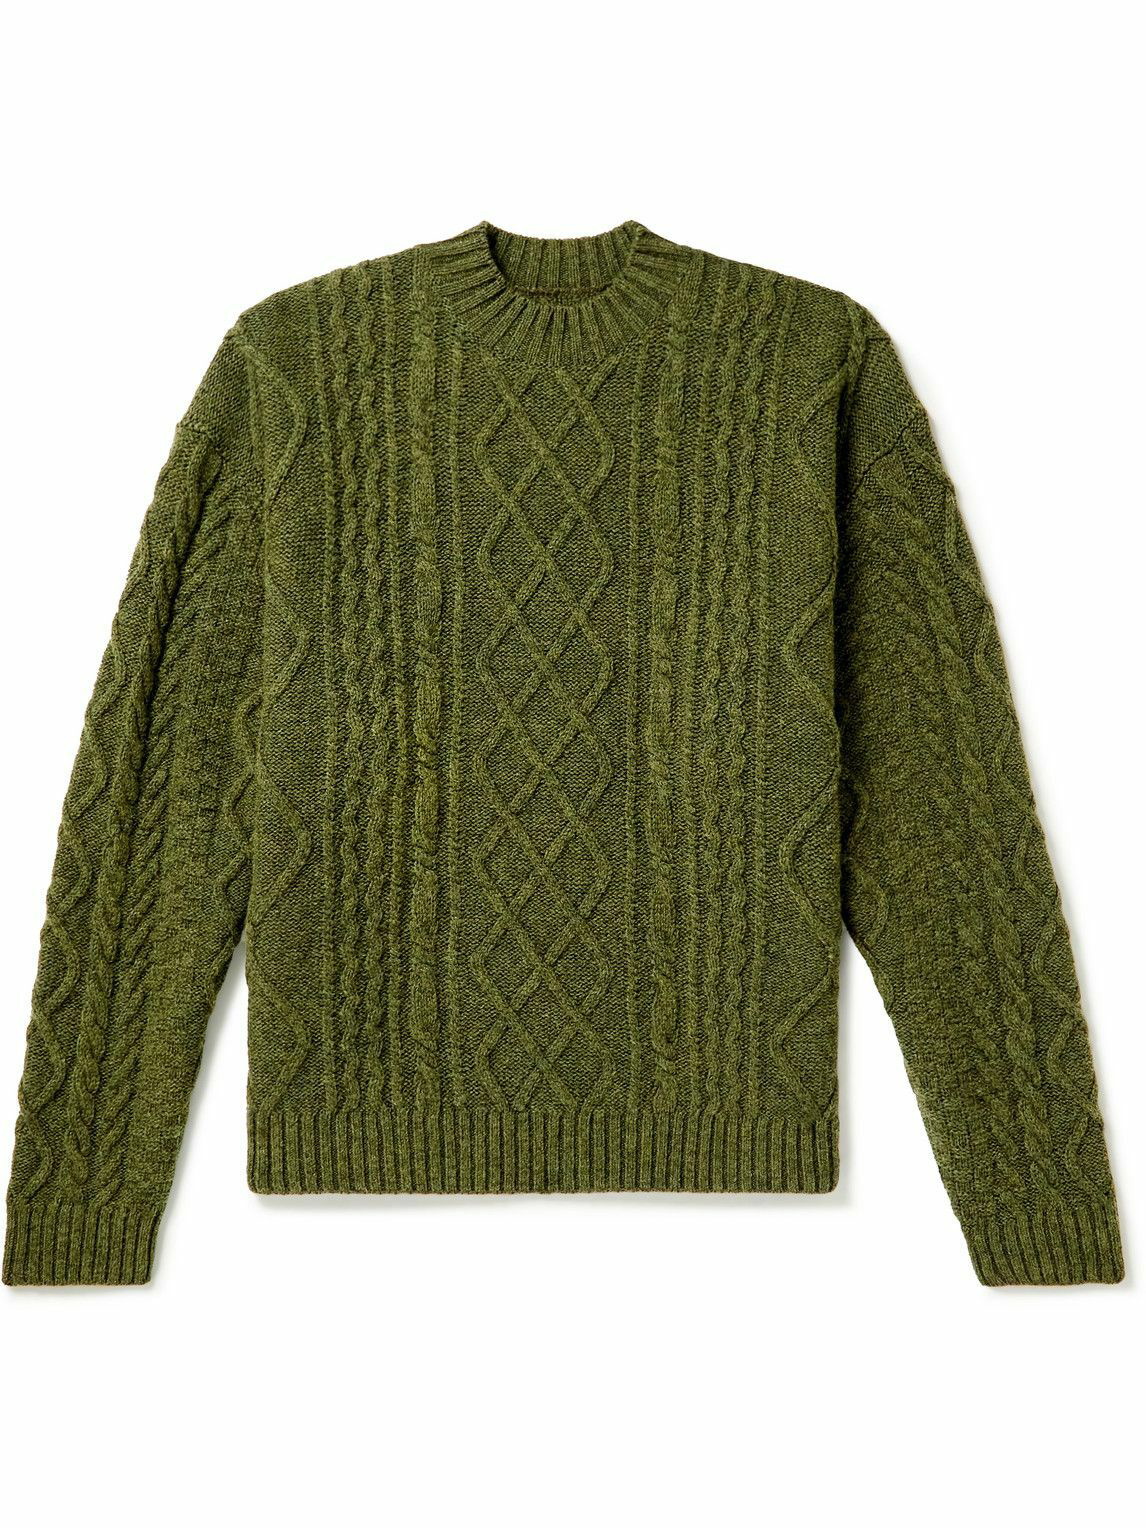 KAPITAL - Intarsia Cable-Knit Wool-Blend Sweater - Green KAPITAL